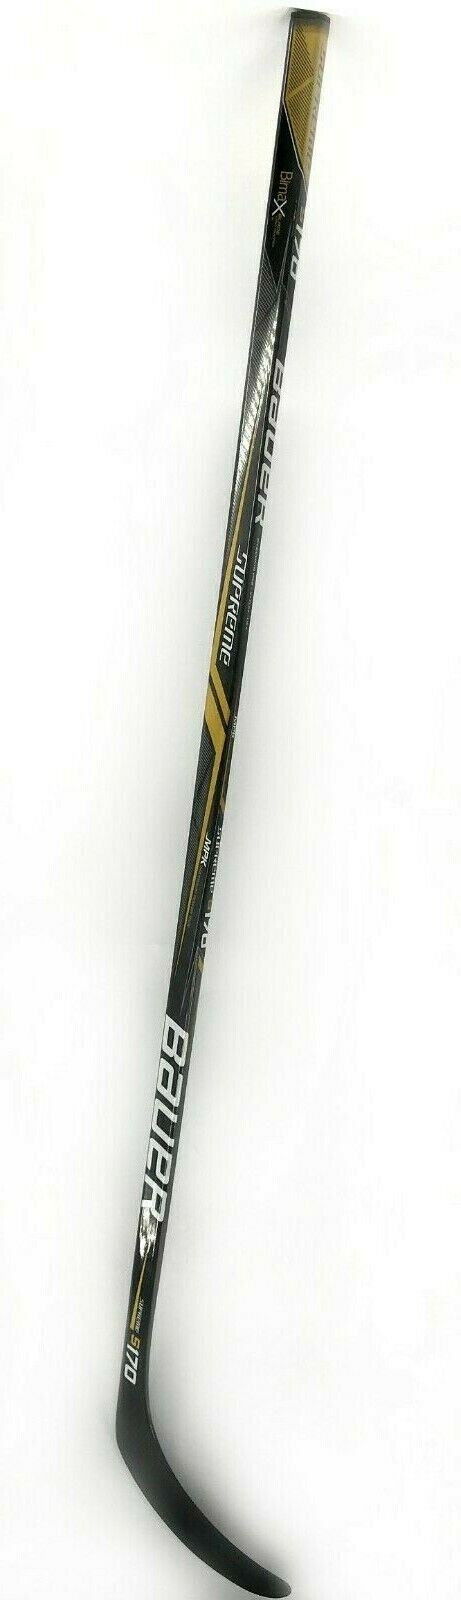 Bauer Supreme S170 JR. Ice Hockey Stick 87 Flex Grip Kane P92 RH #Z61